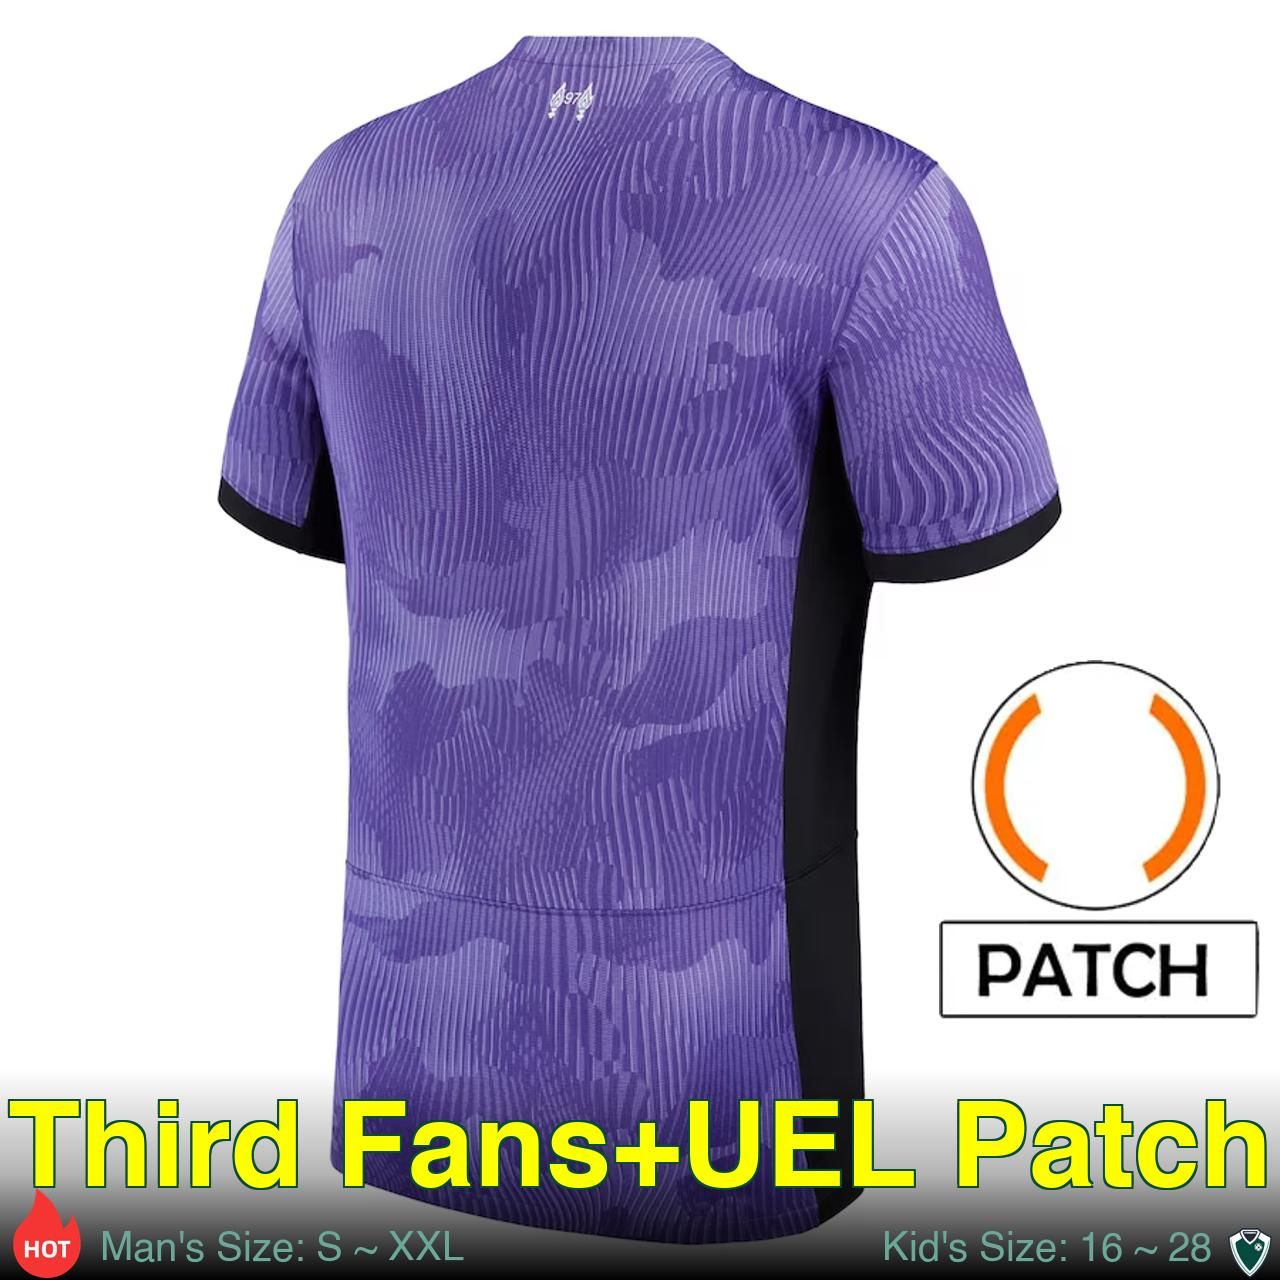 Third Fans+UEL Patch